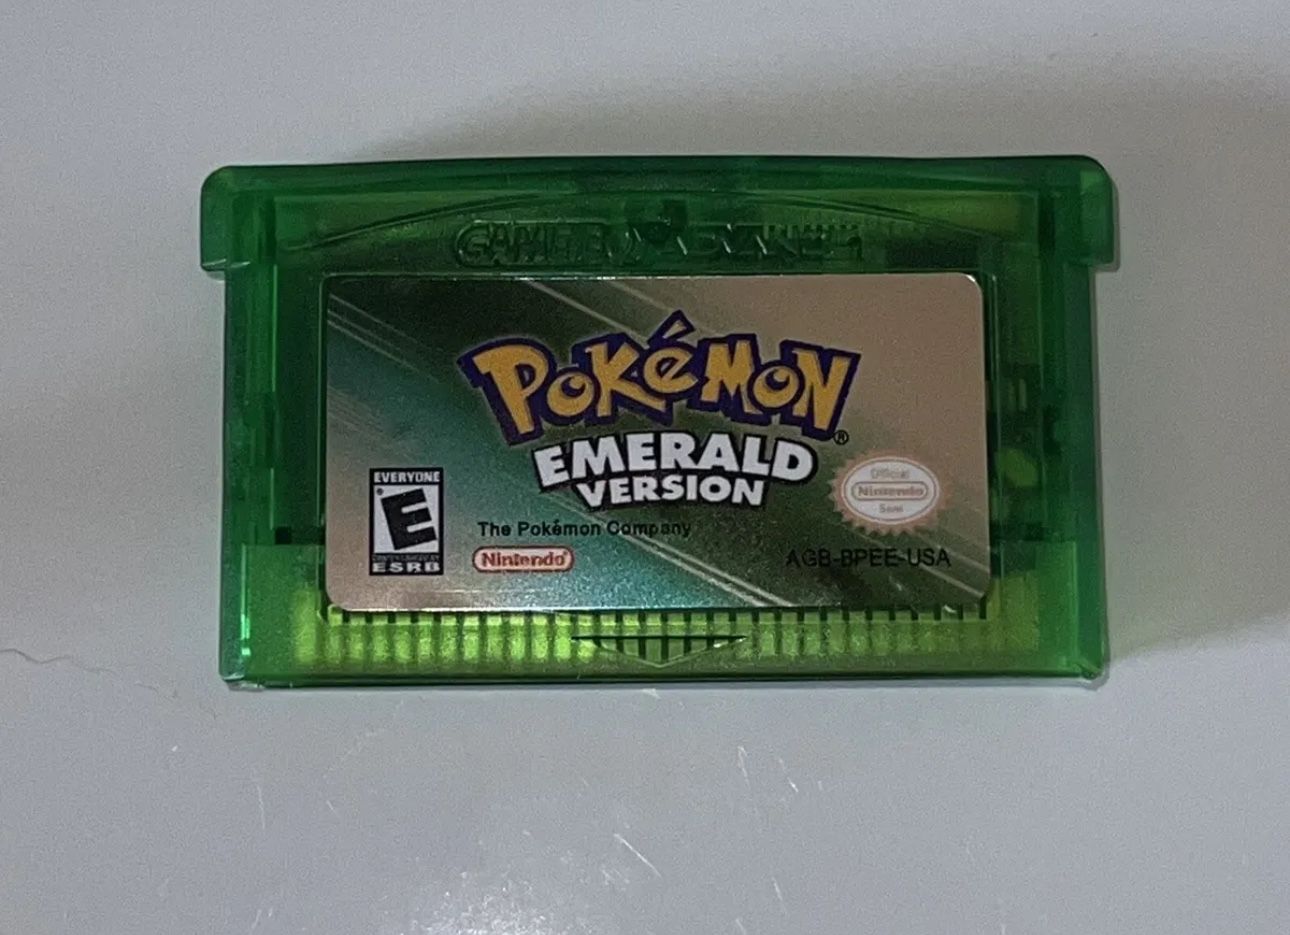 Pokemon Emerald Version (Nintendo Game Boy Advance, 2005)